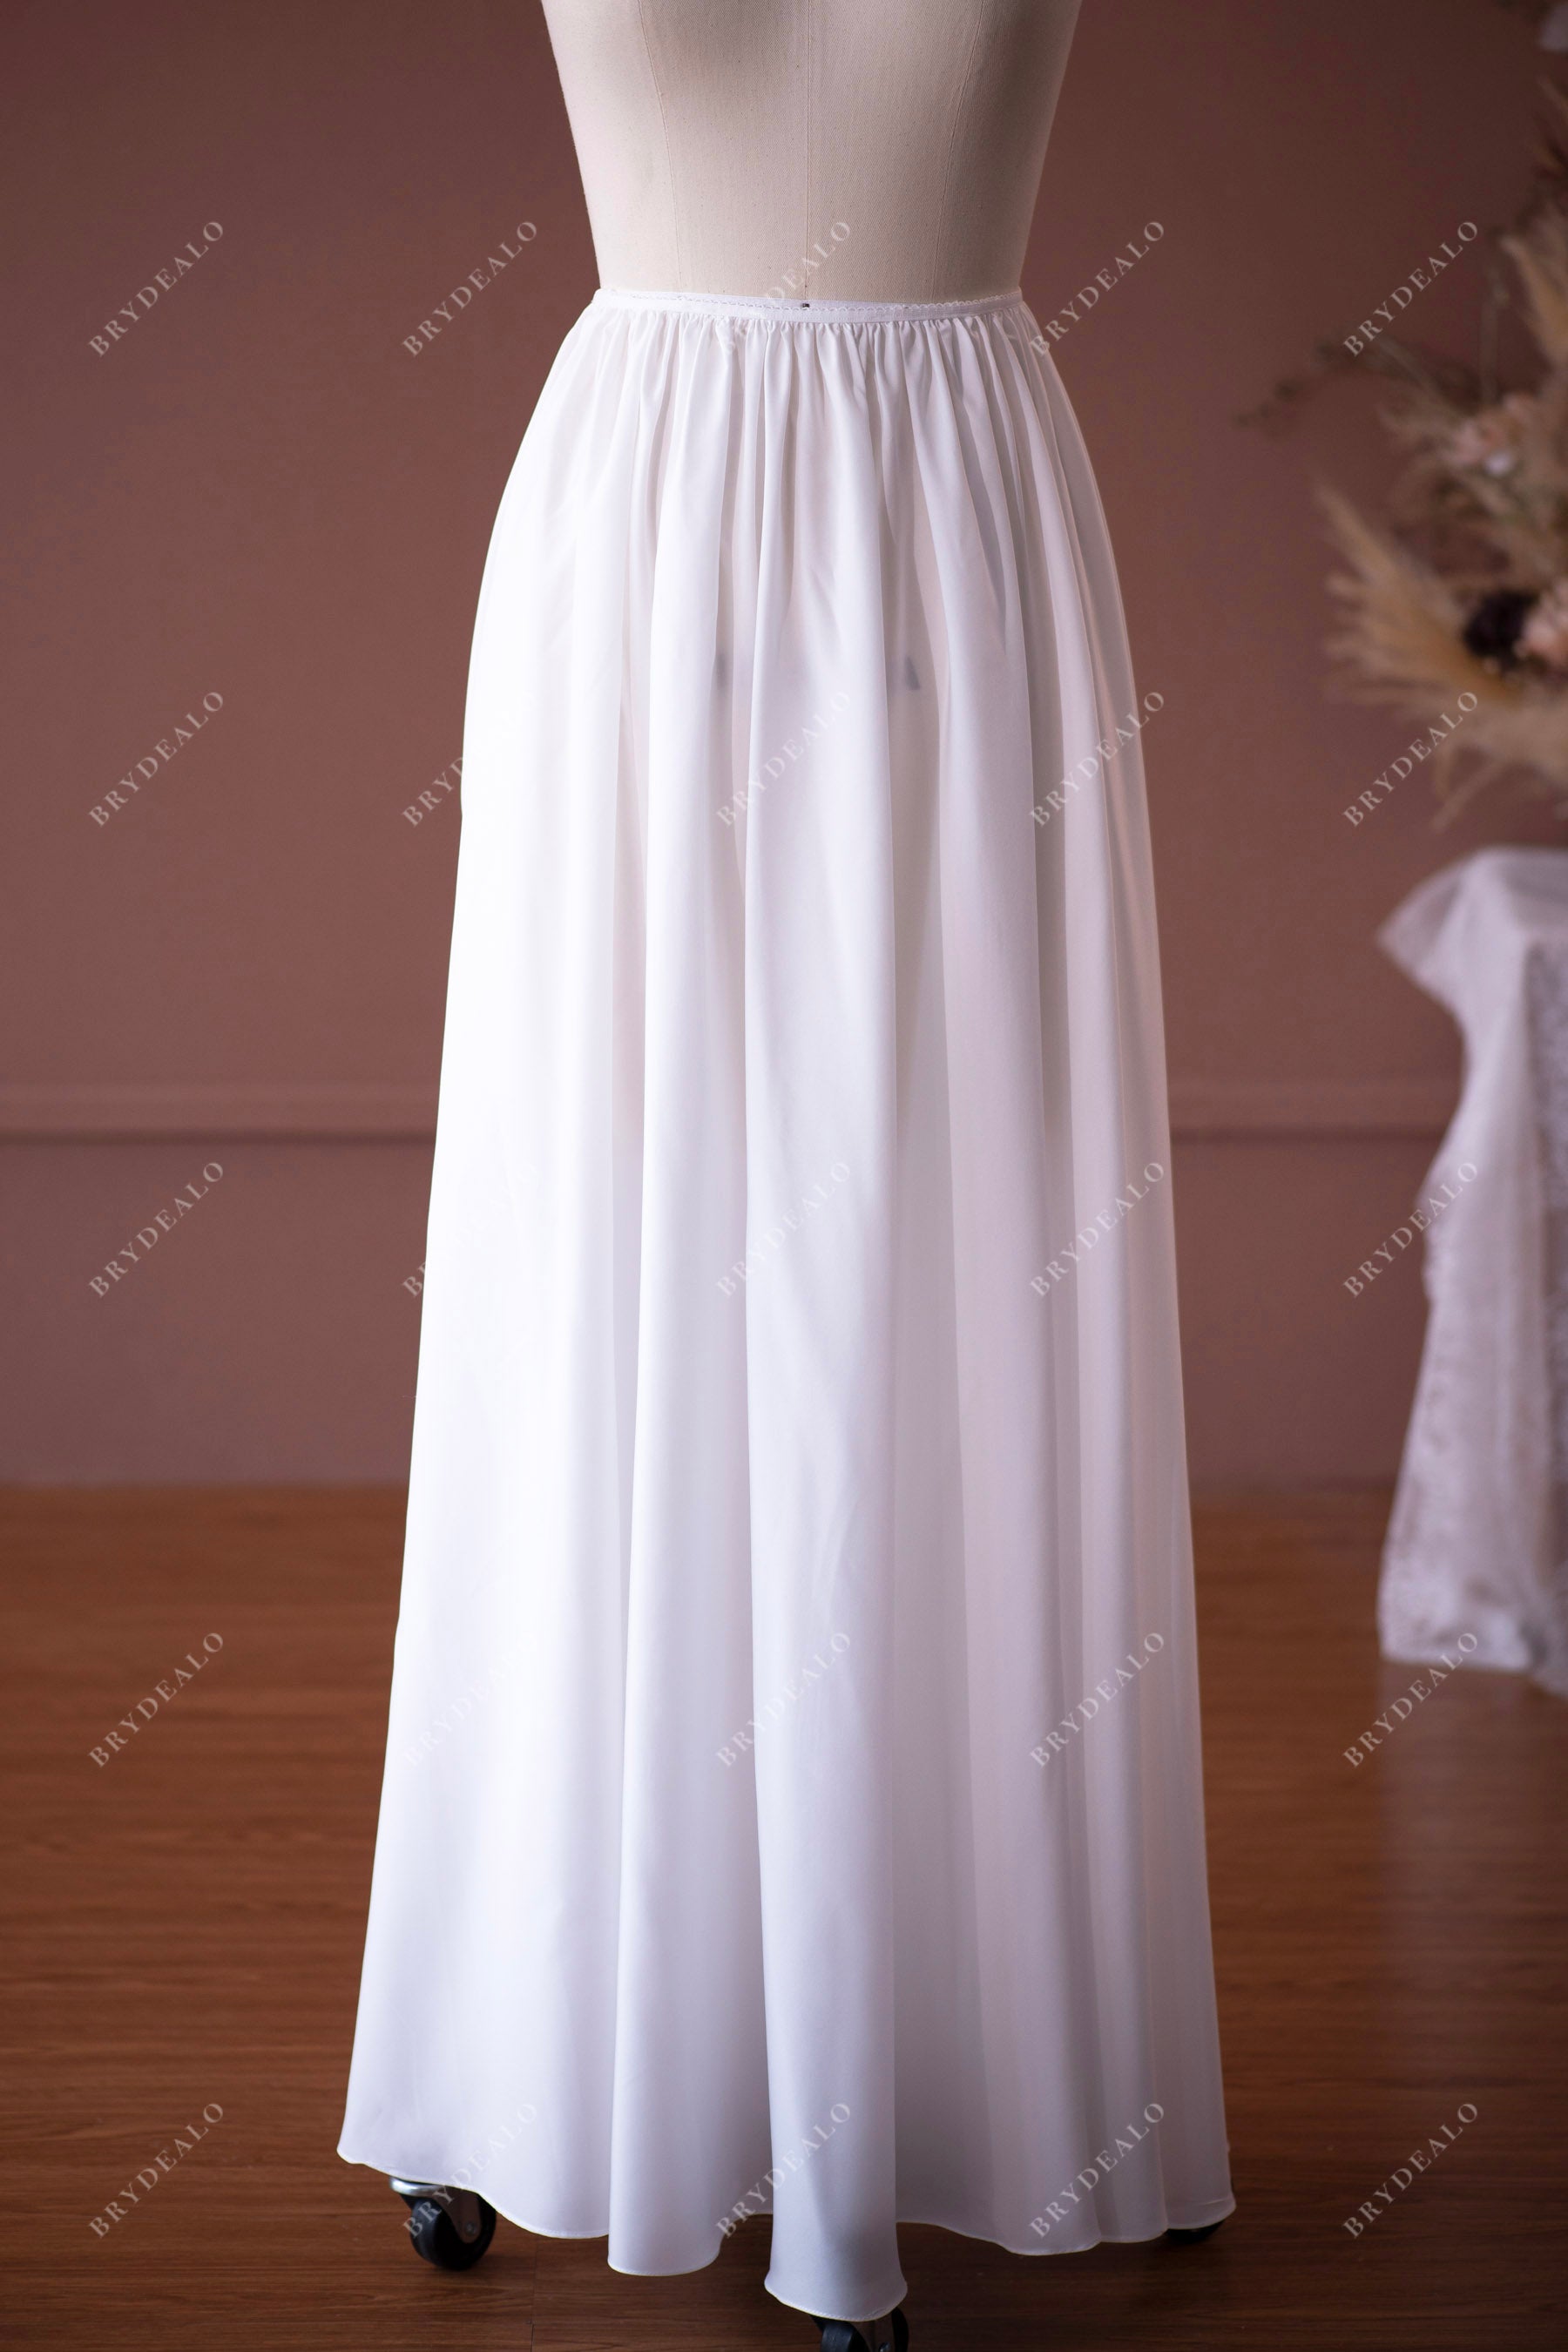 soft cotton like wedding dress skirt lining